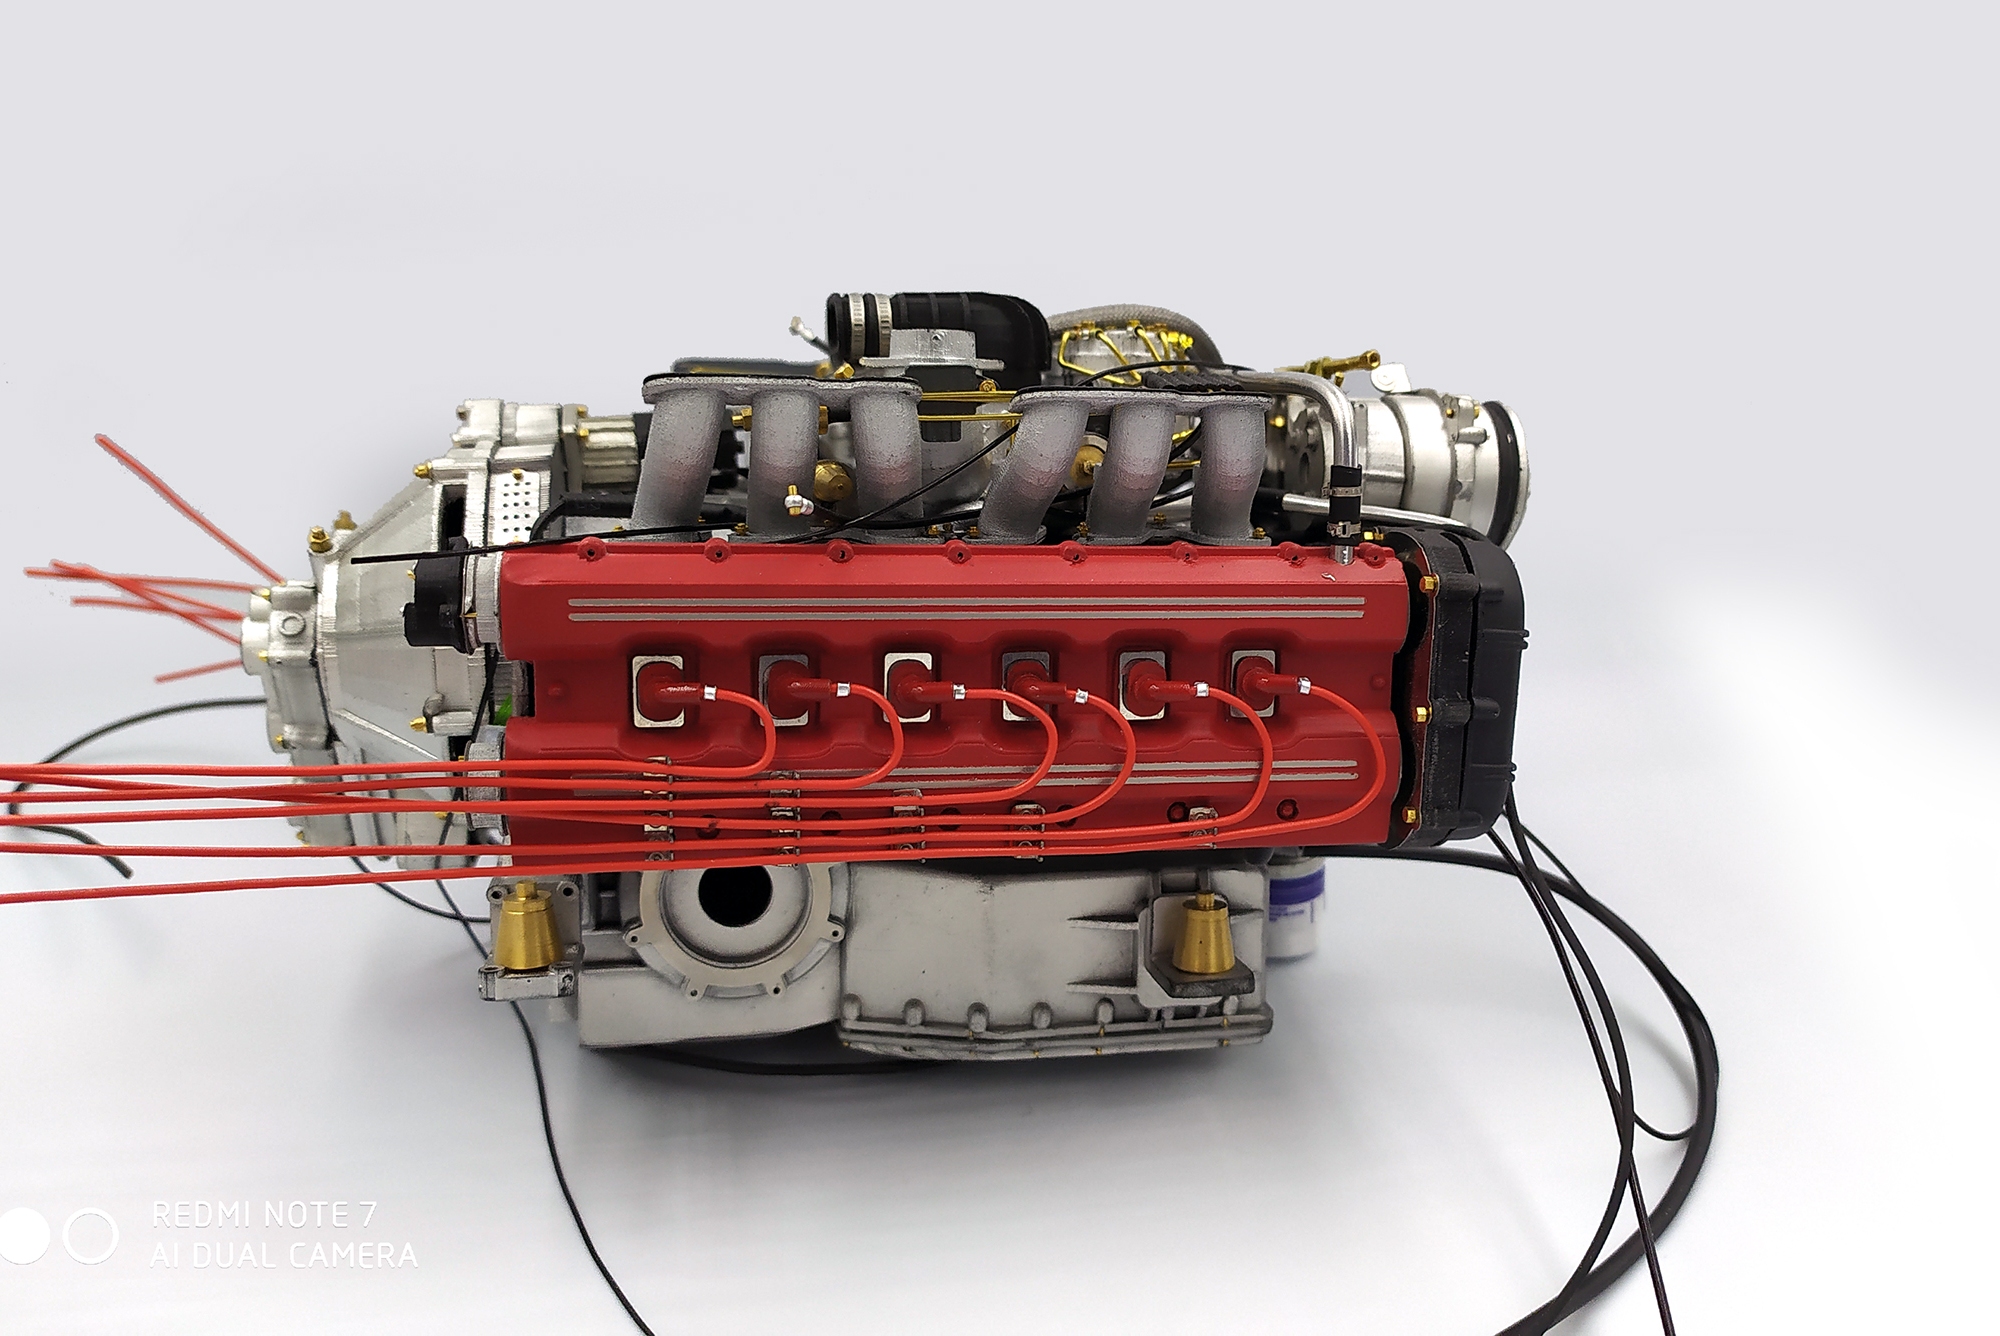 Transkit Ferrari testarossa_engine wires